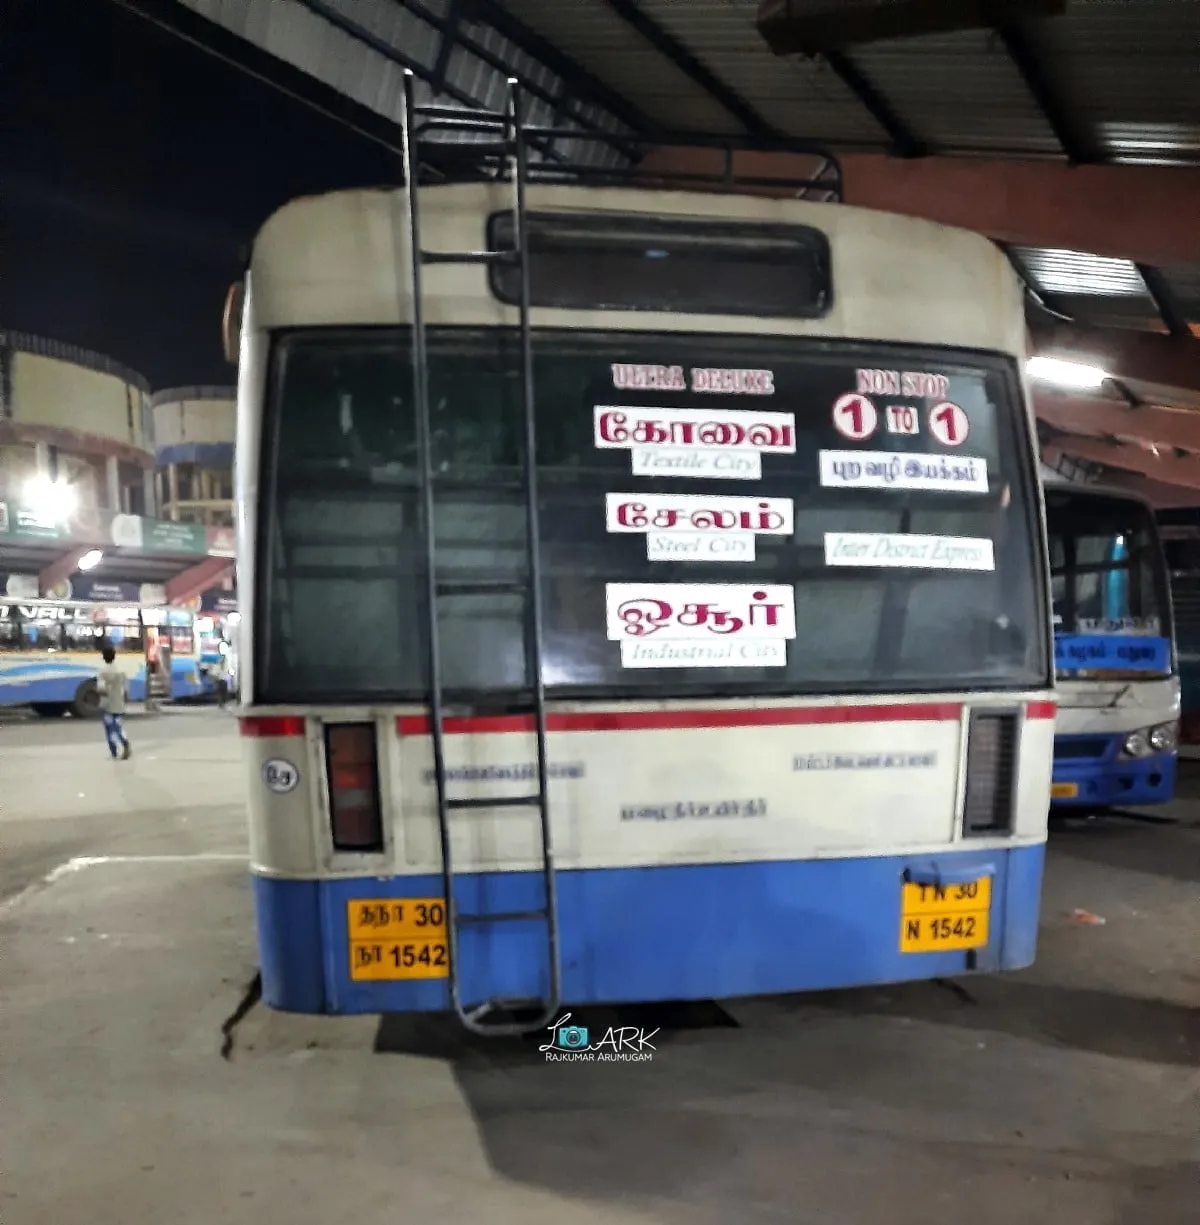 TNSTC TN 30 N 1542 Coimbatore - Salem - Hosur Bus Timings 